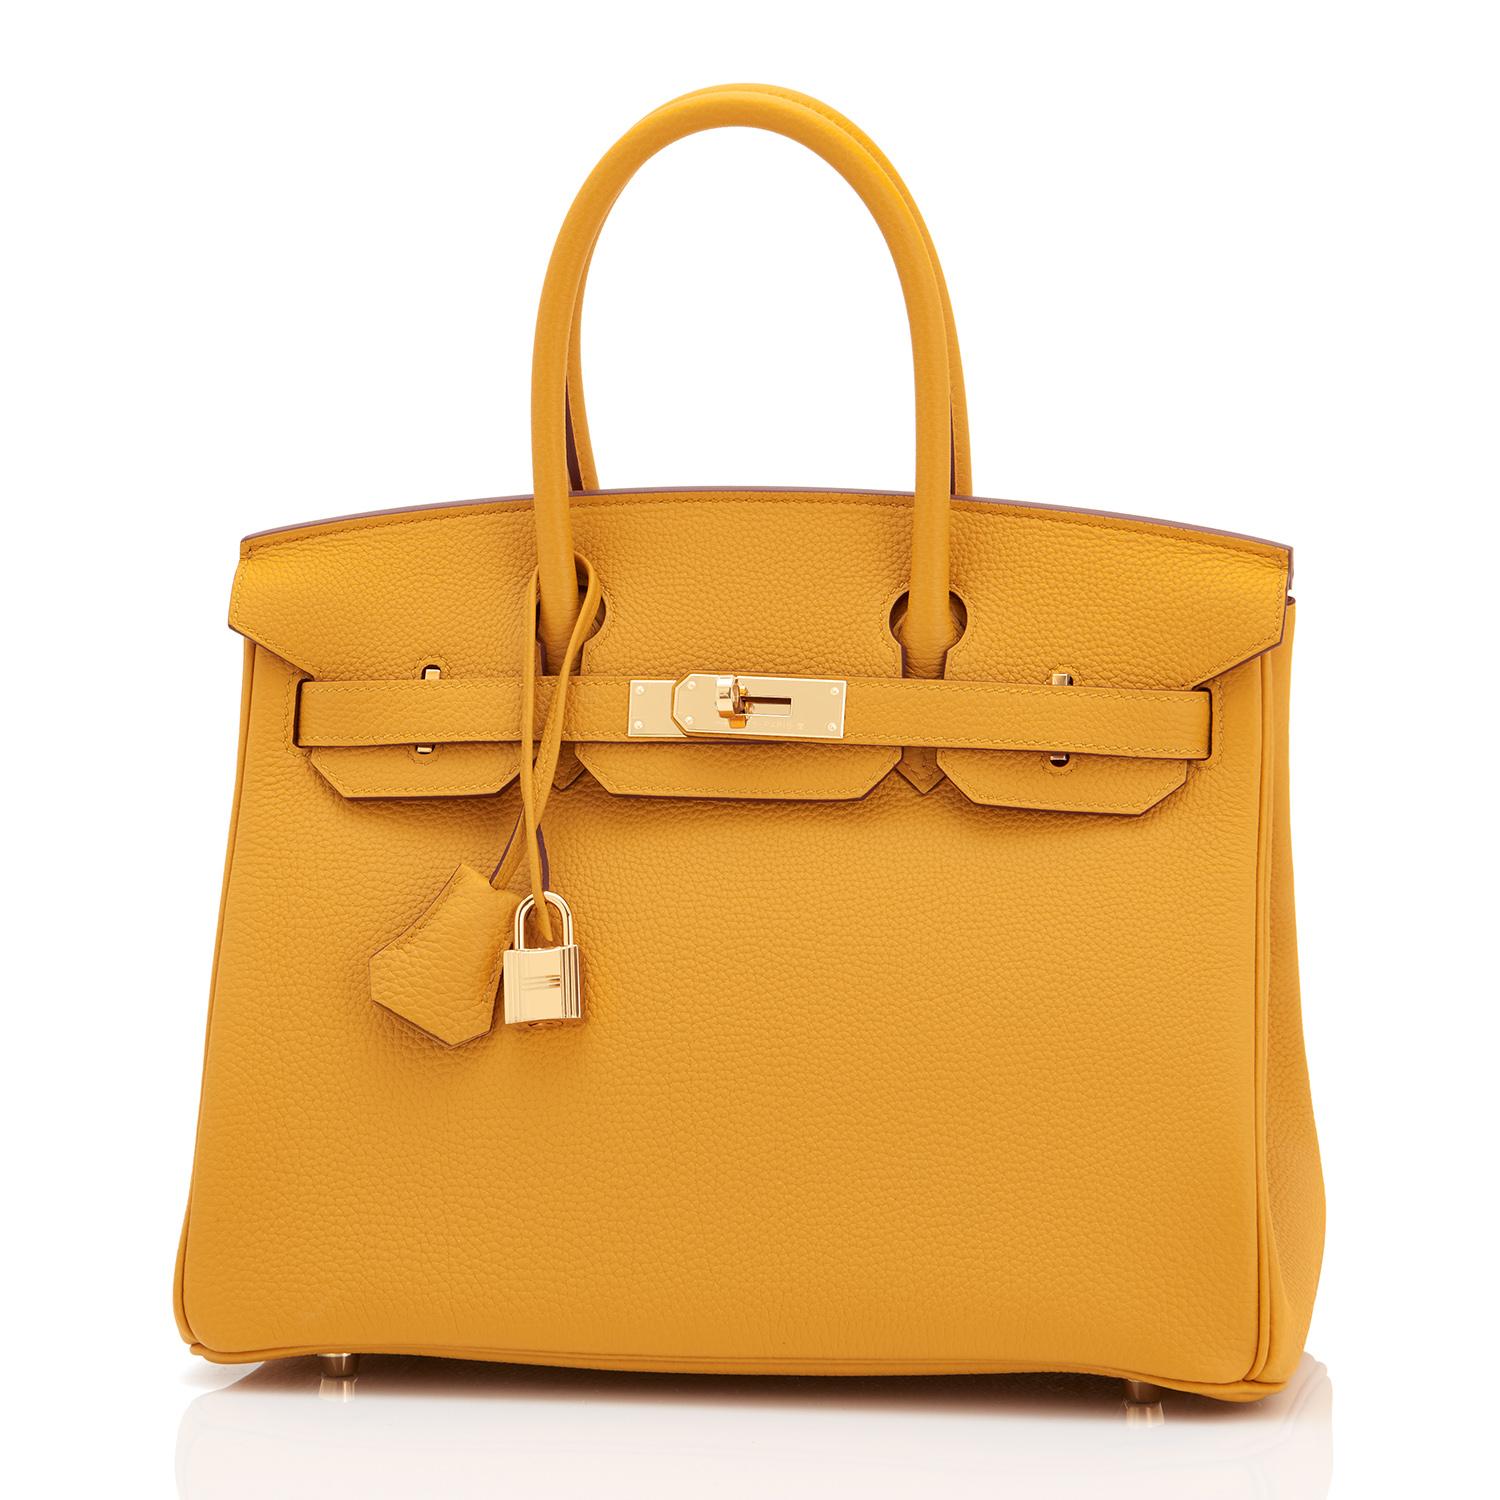 Women's Hermes Birkin 30cm Jaune Ambre Bag Togo Amber Yellow Gold Hardware 